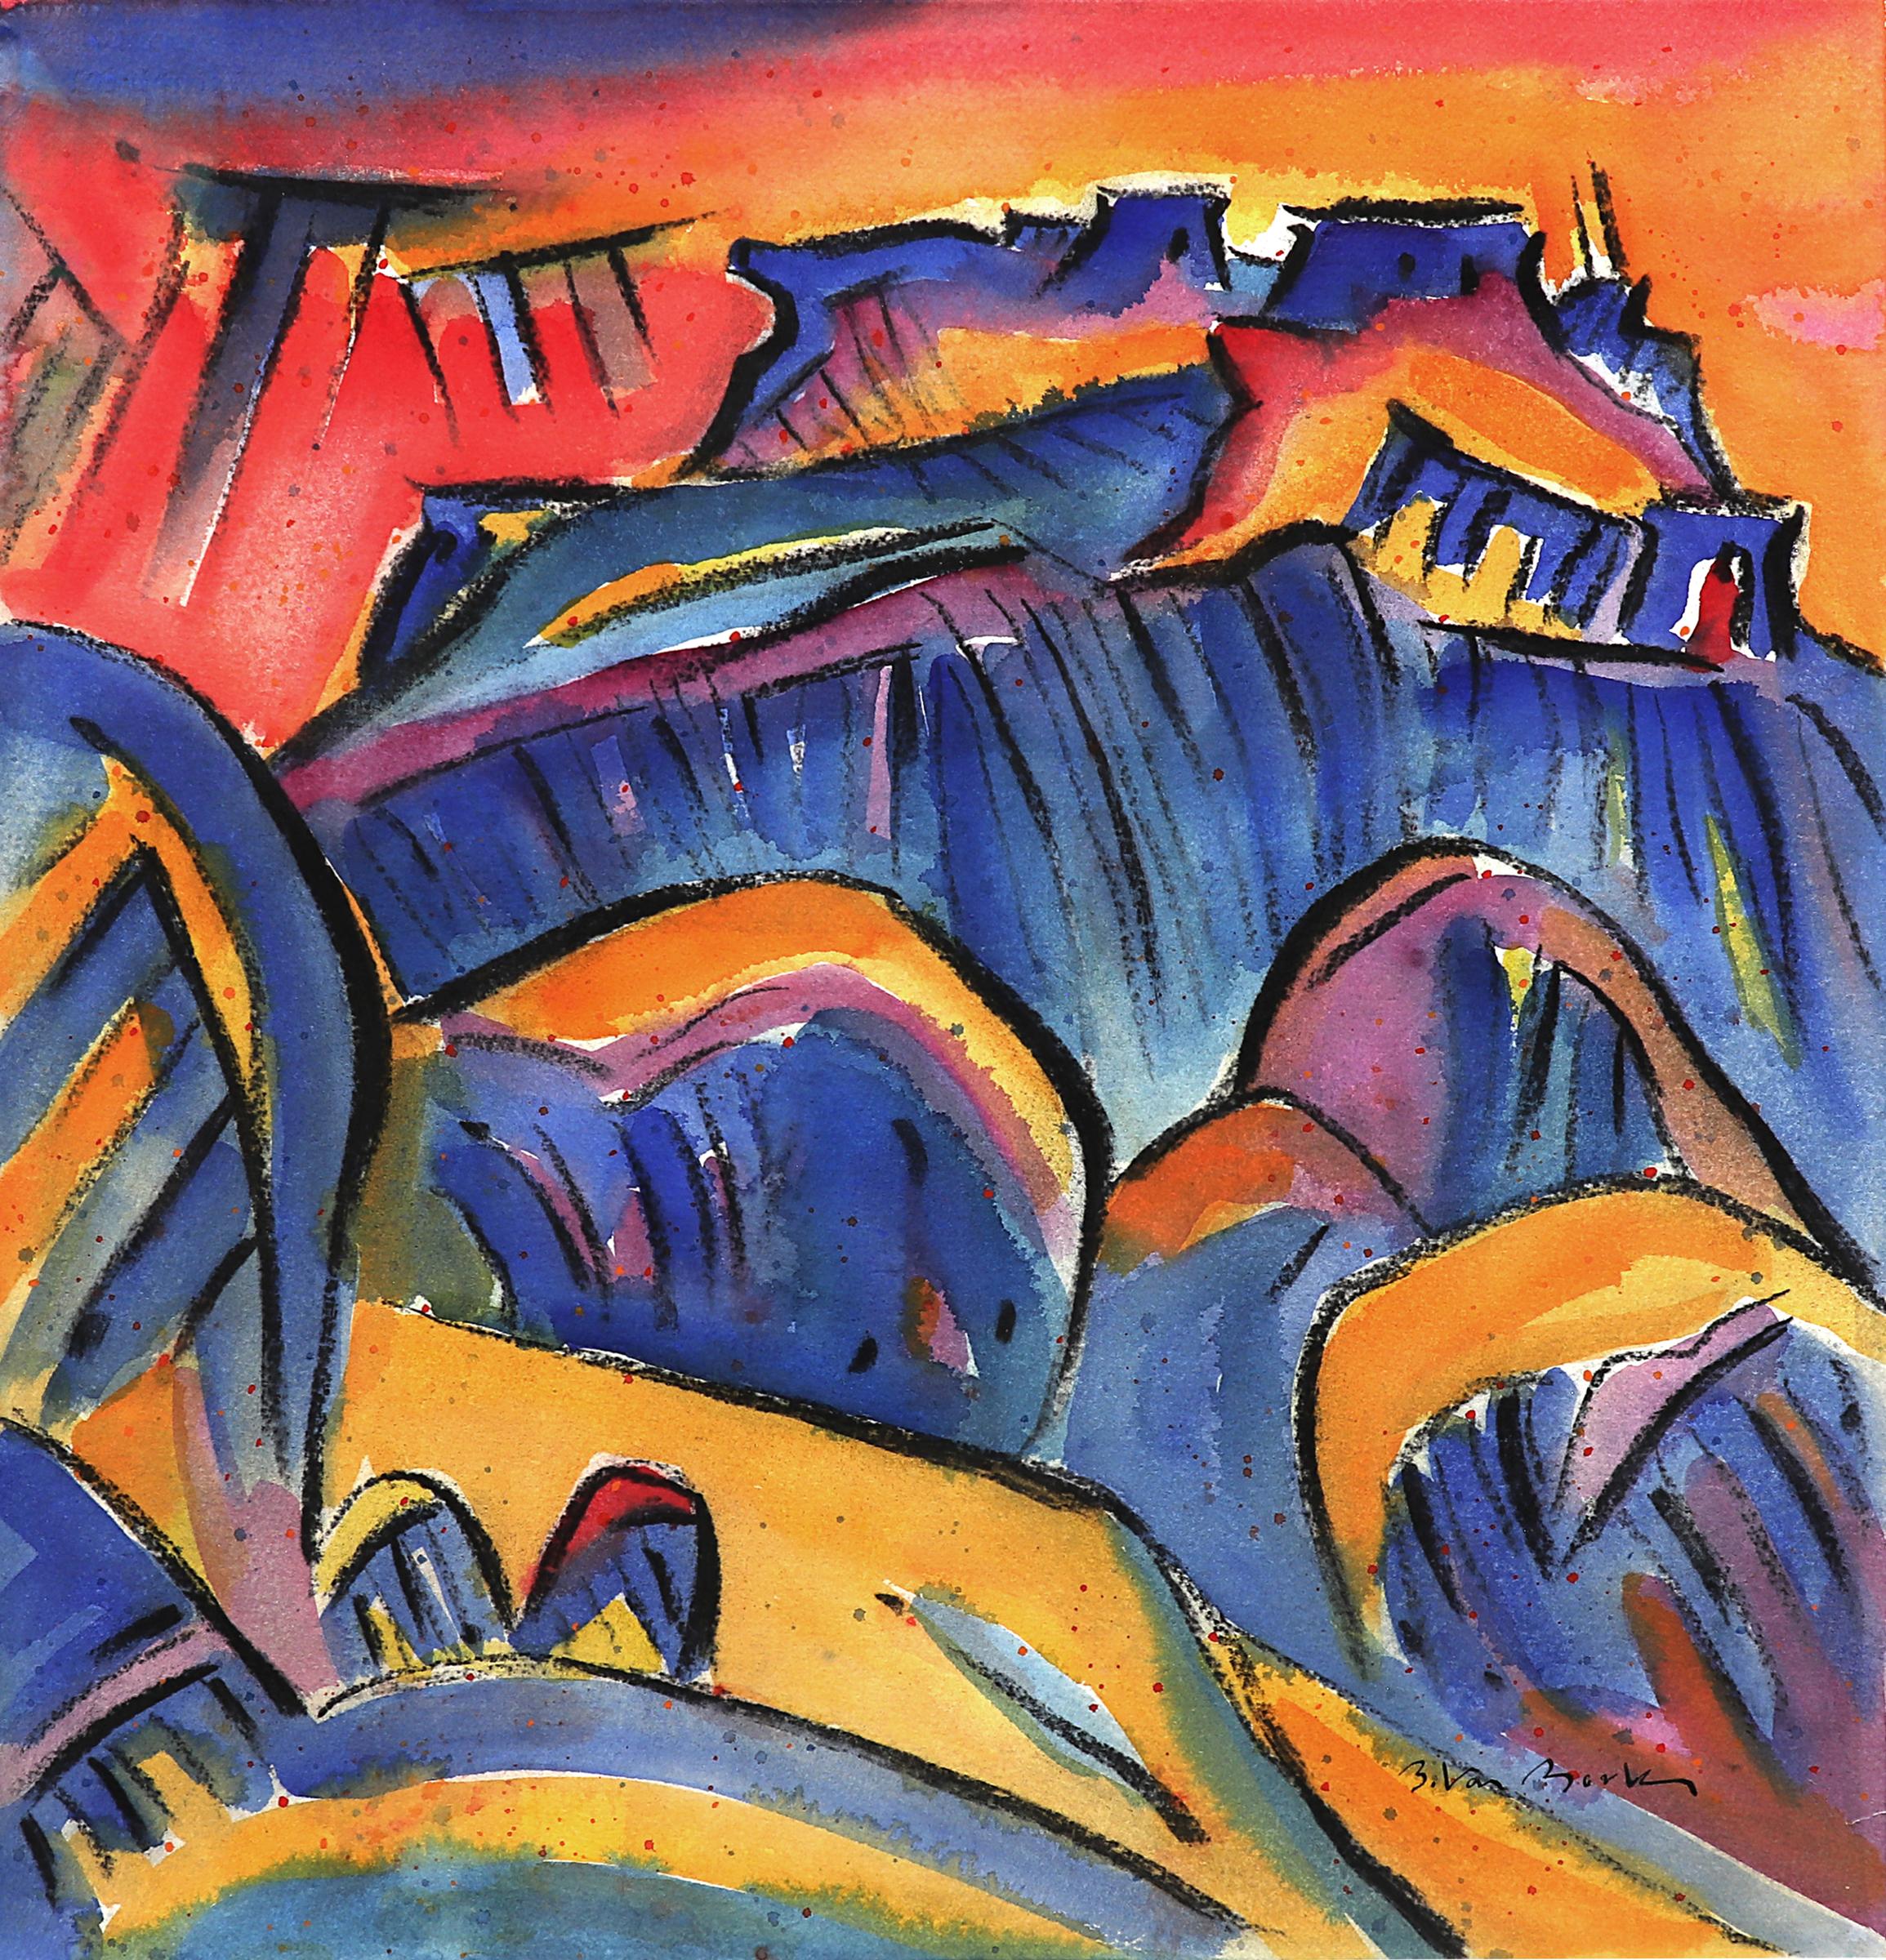 Second Mesa (Hopi Pueblo, Arizona), Multicolored Southwest Mixed Media Landscape - Art by Bert Van Bork